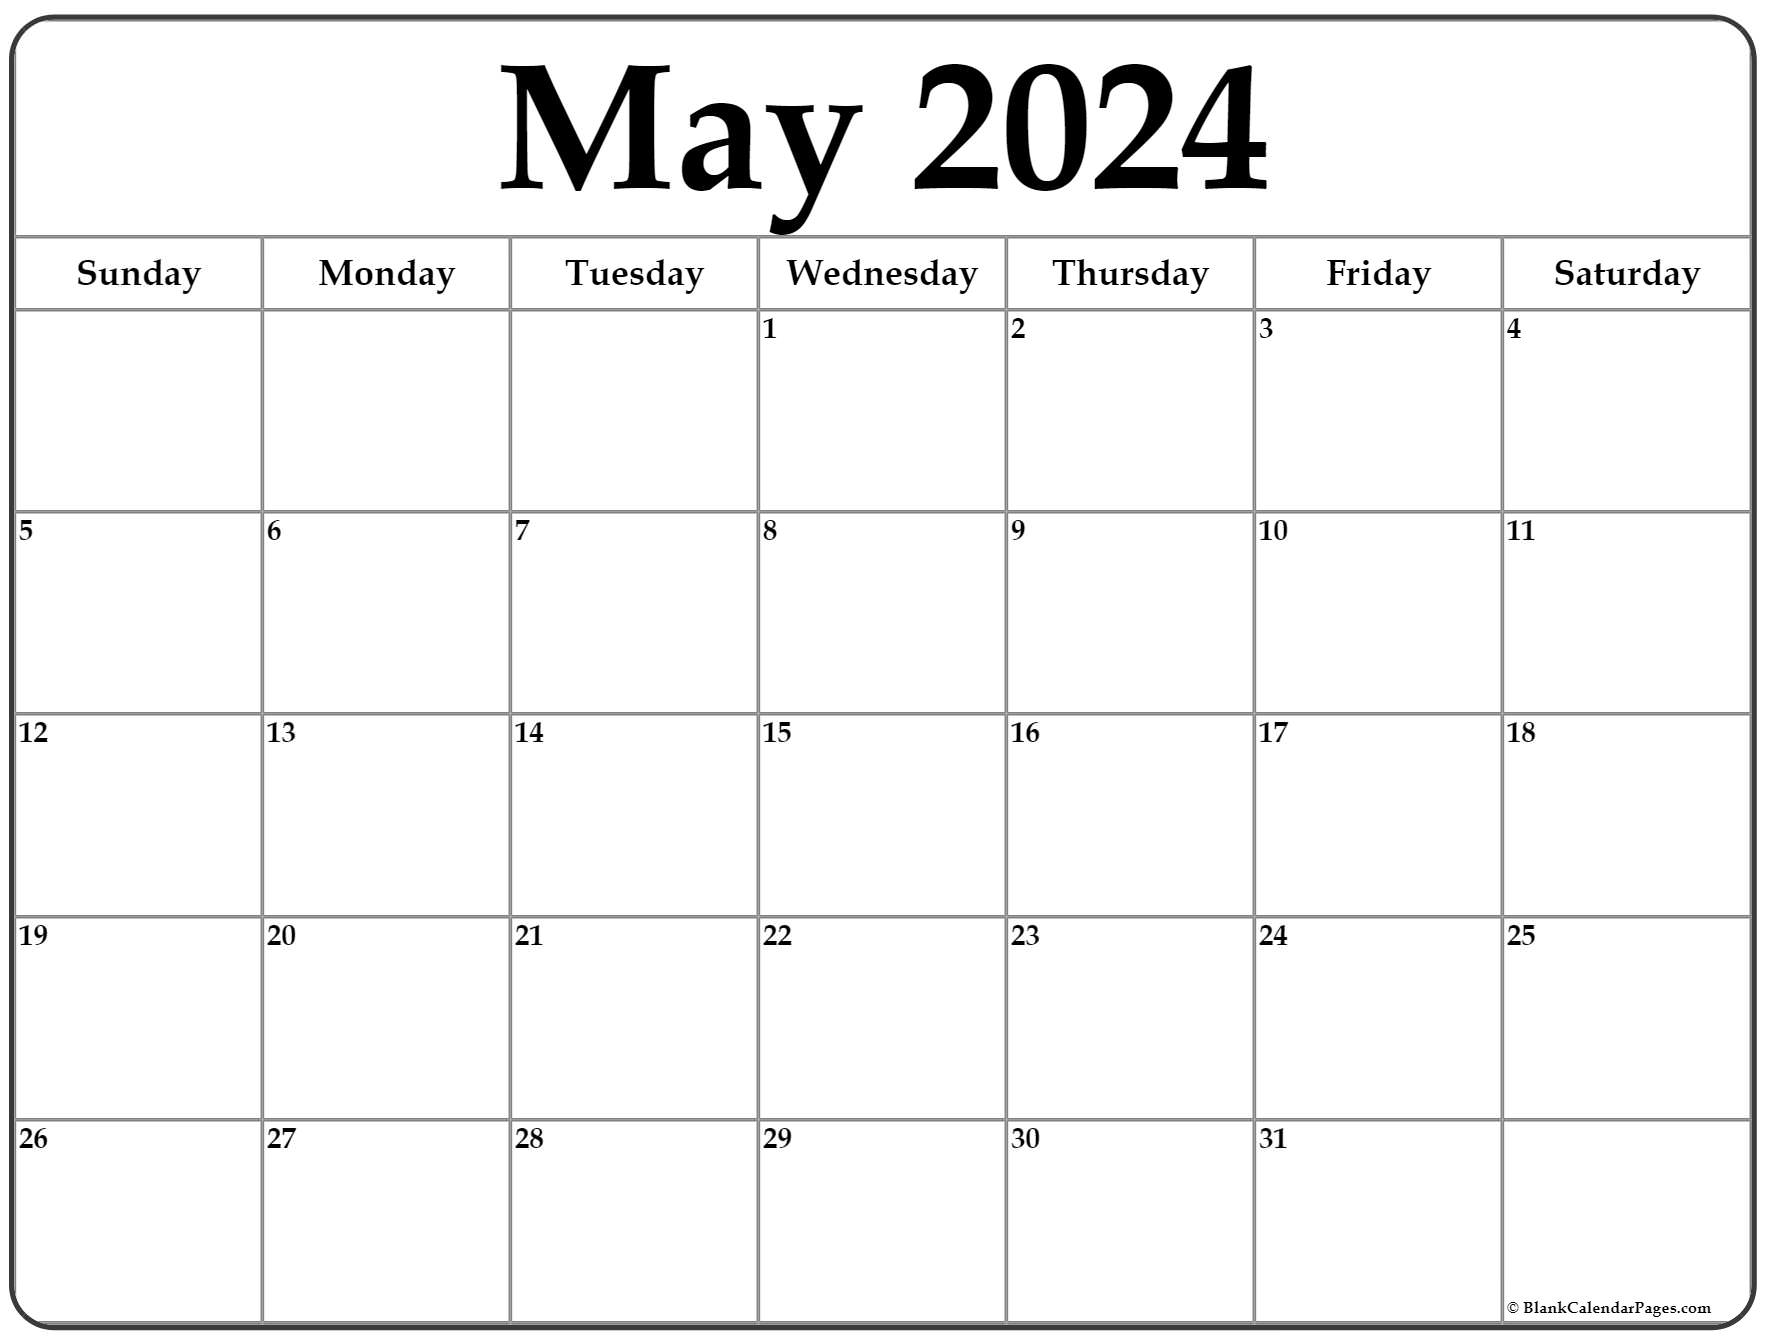 Free May Calendar 2022 Printable May 2022 Calendar | Free Printable Calendar Templates